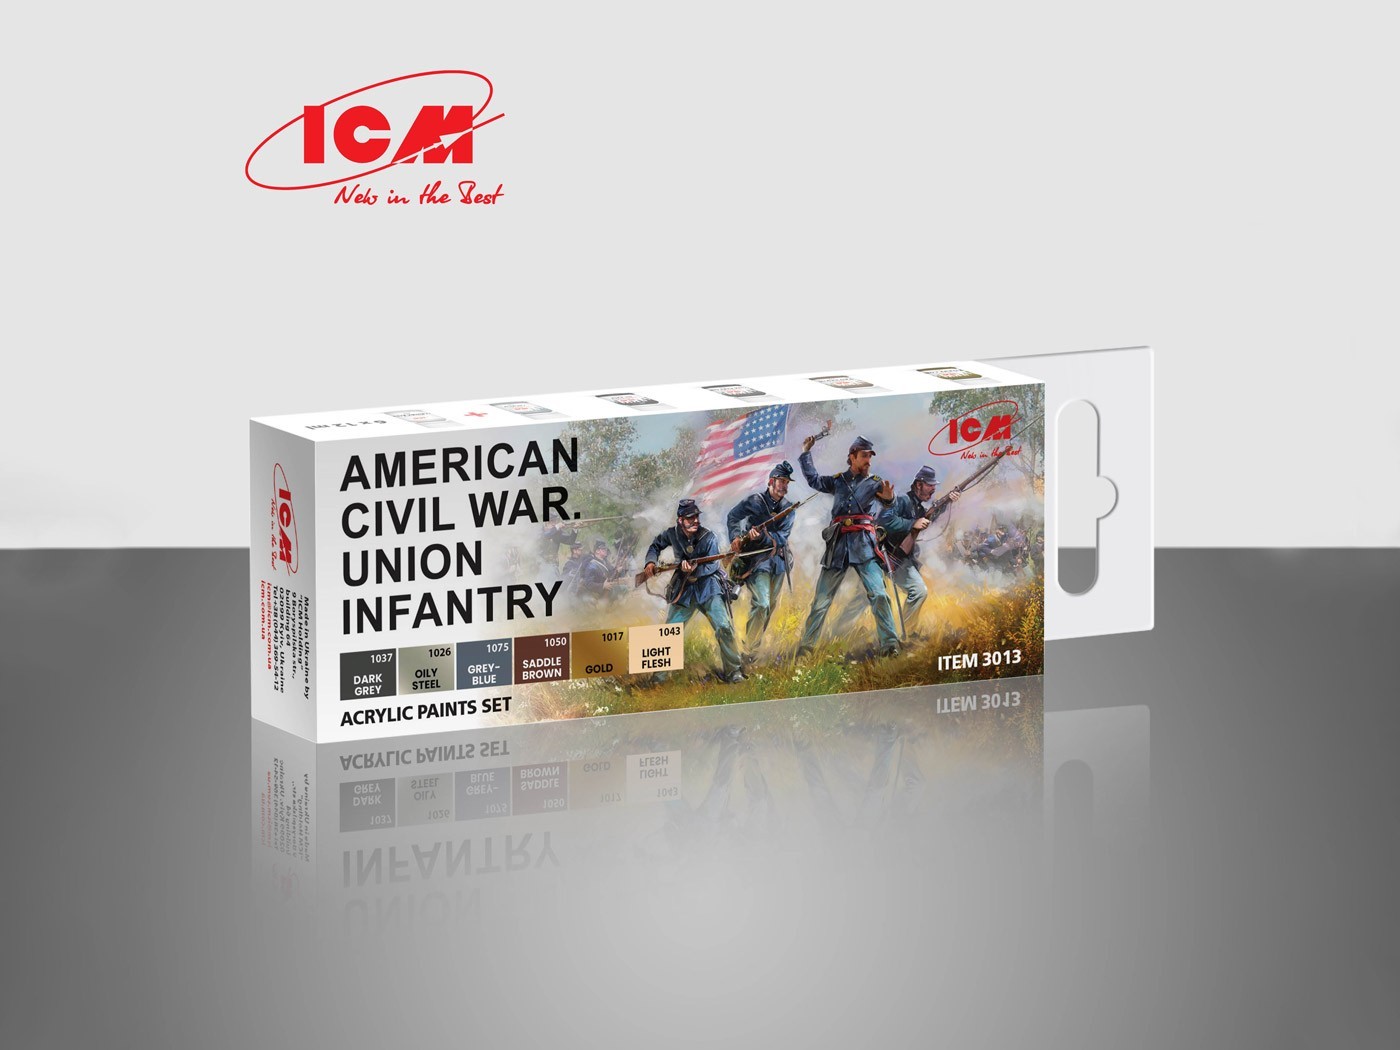 Acrylic paint set for American Civil War Union Infantry